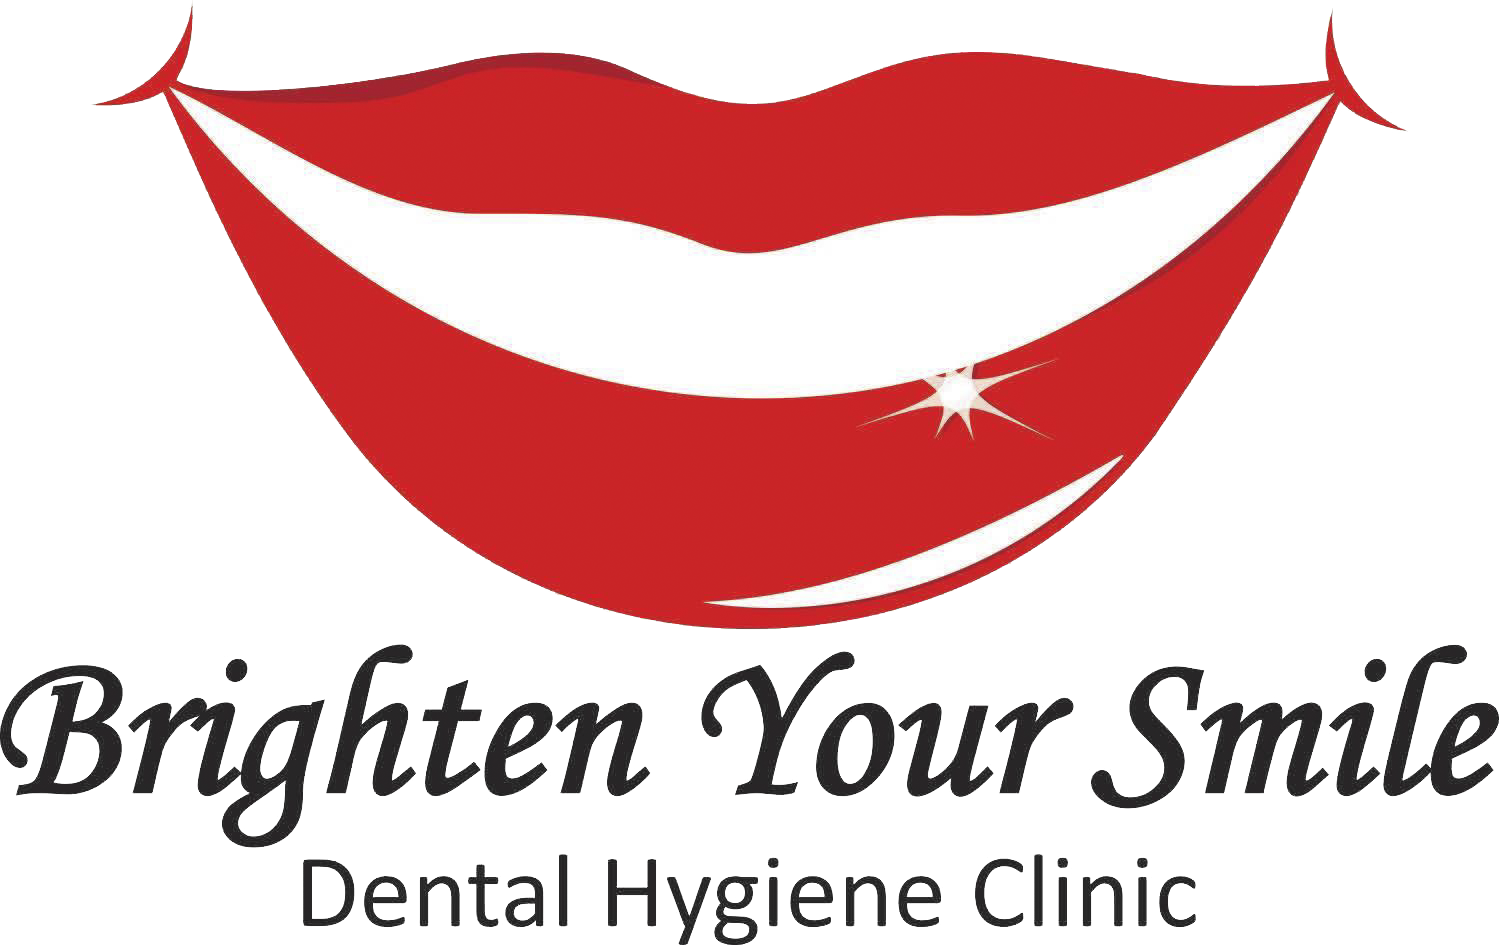 Brighten Your Smile Dental Hygiene Clinic